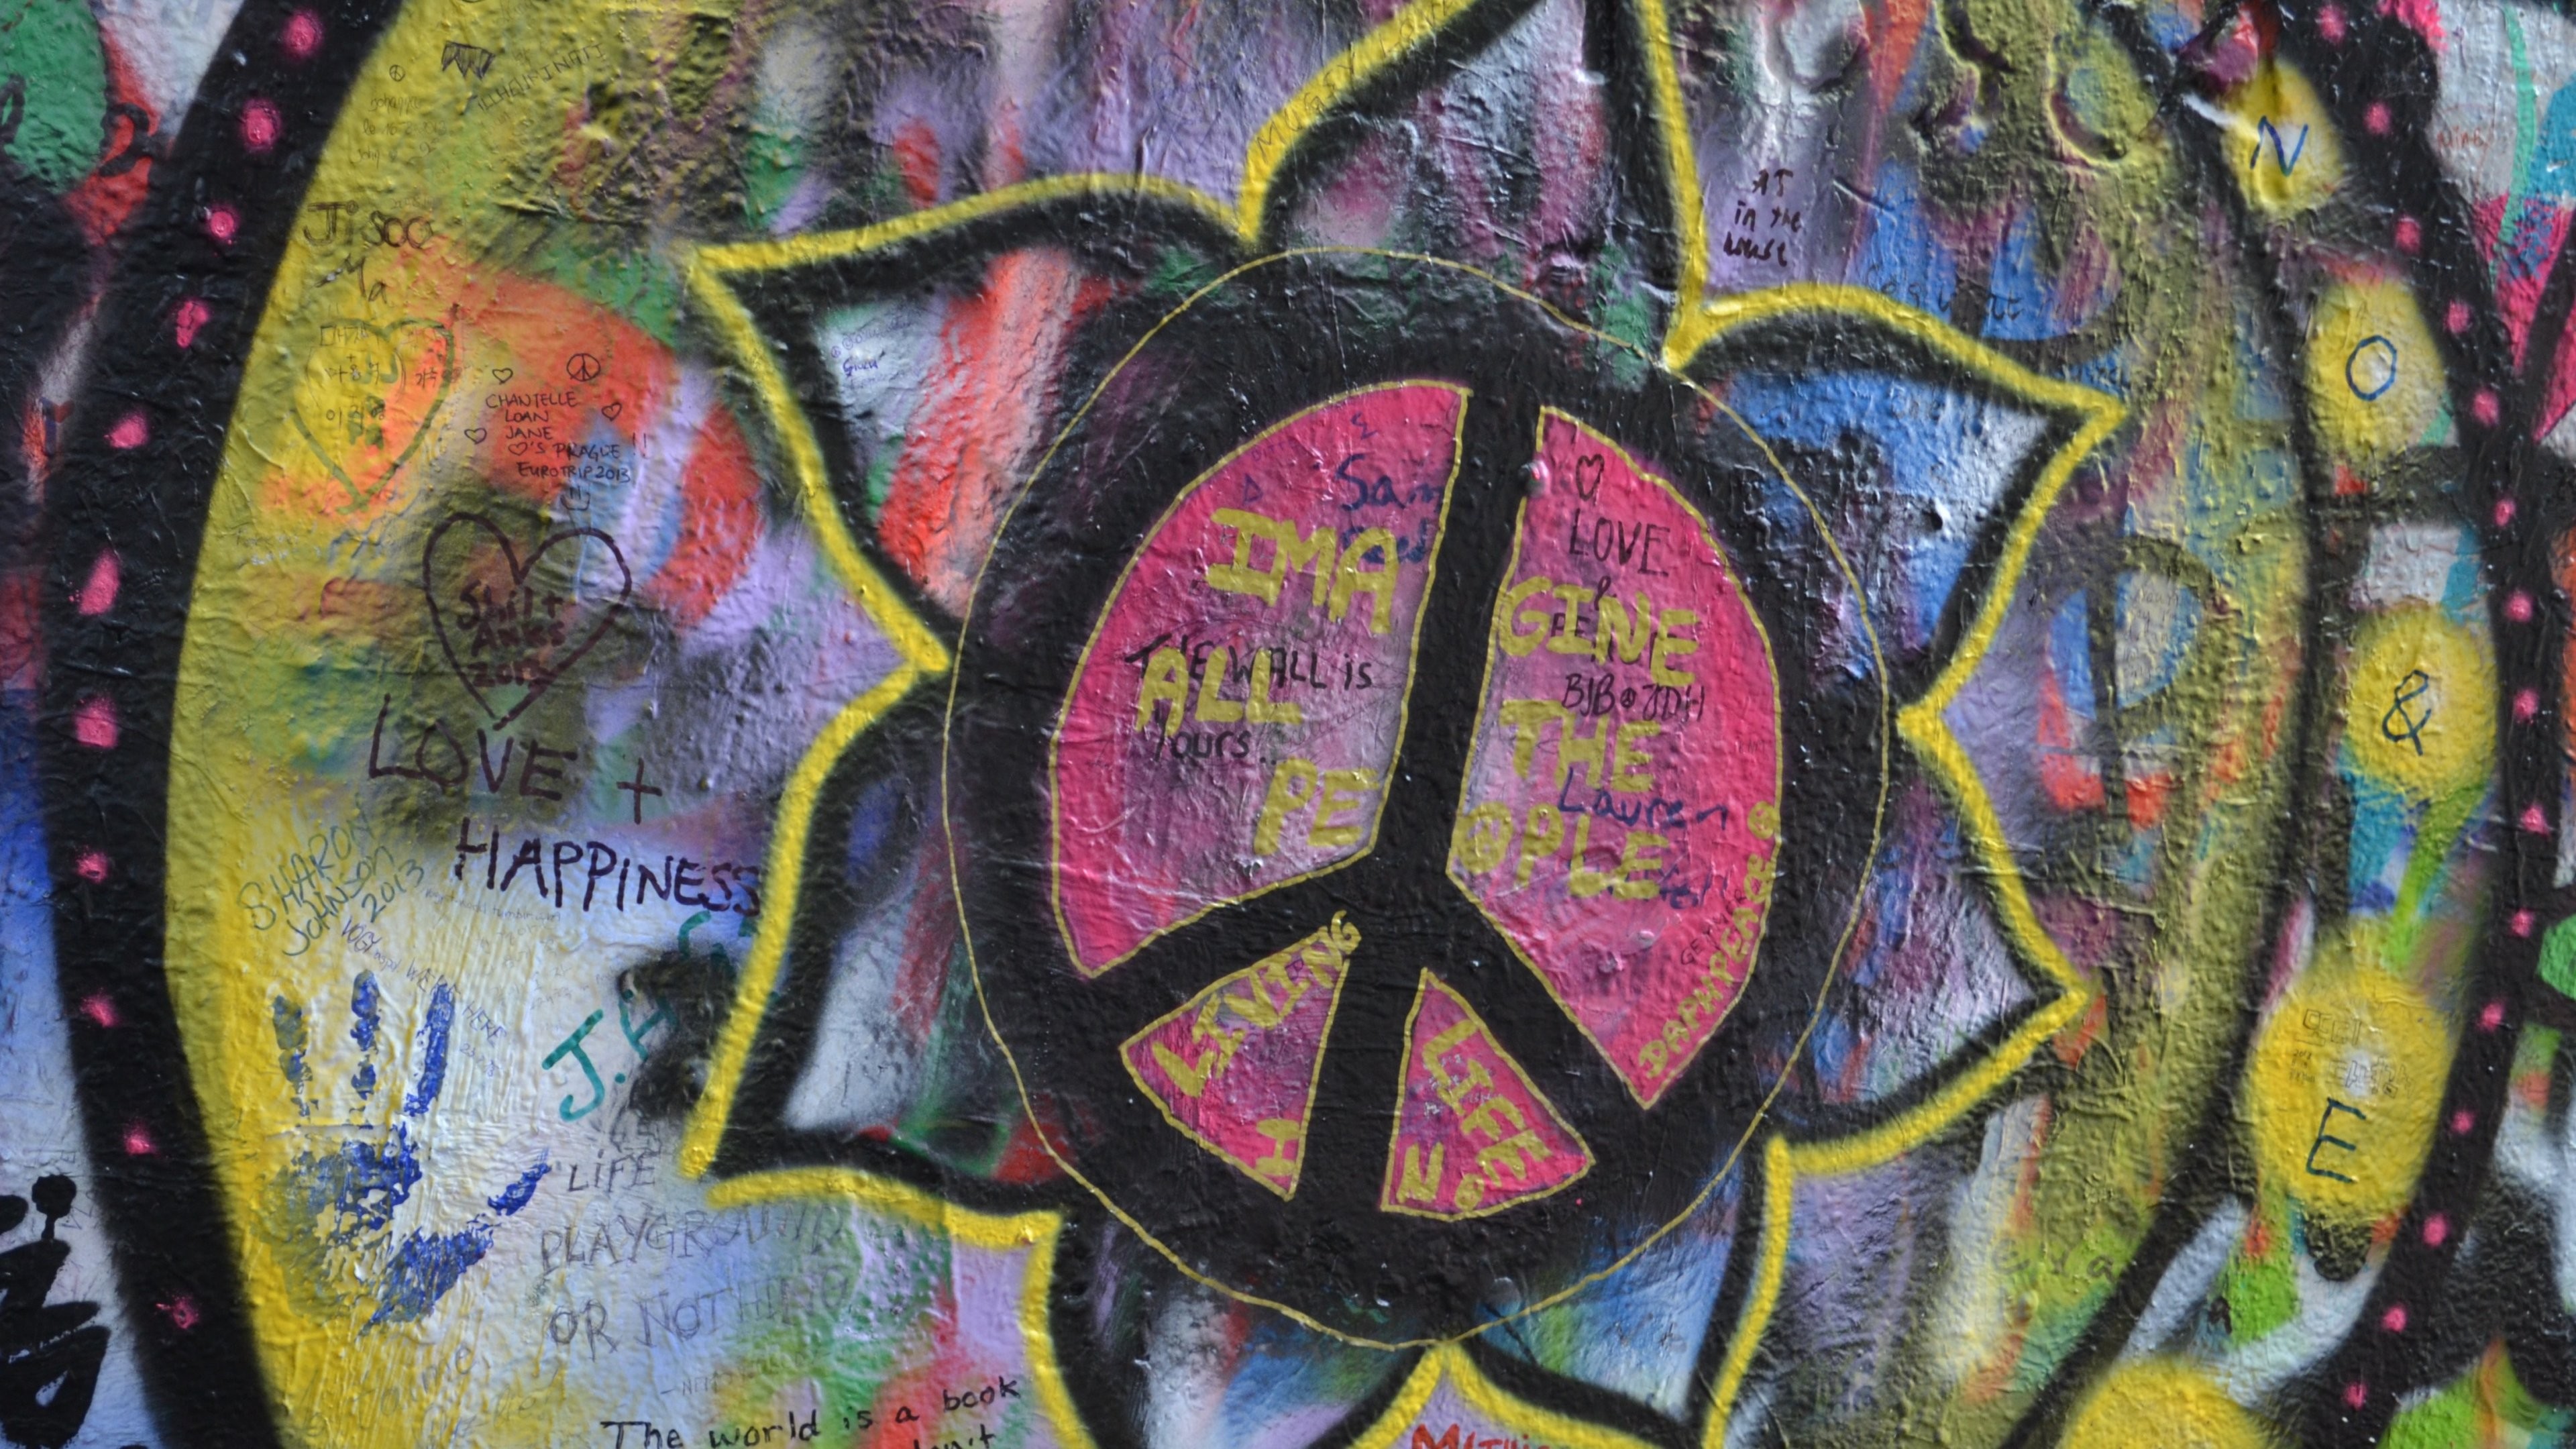 3840x2160 Lennon Wall Imagine Peace Flower